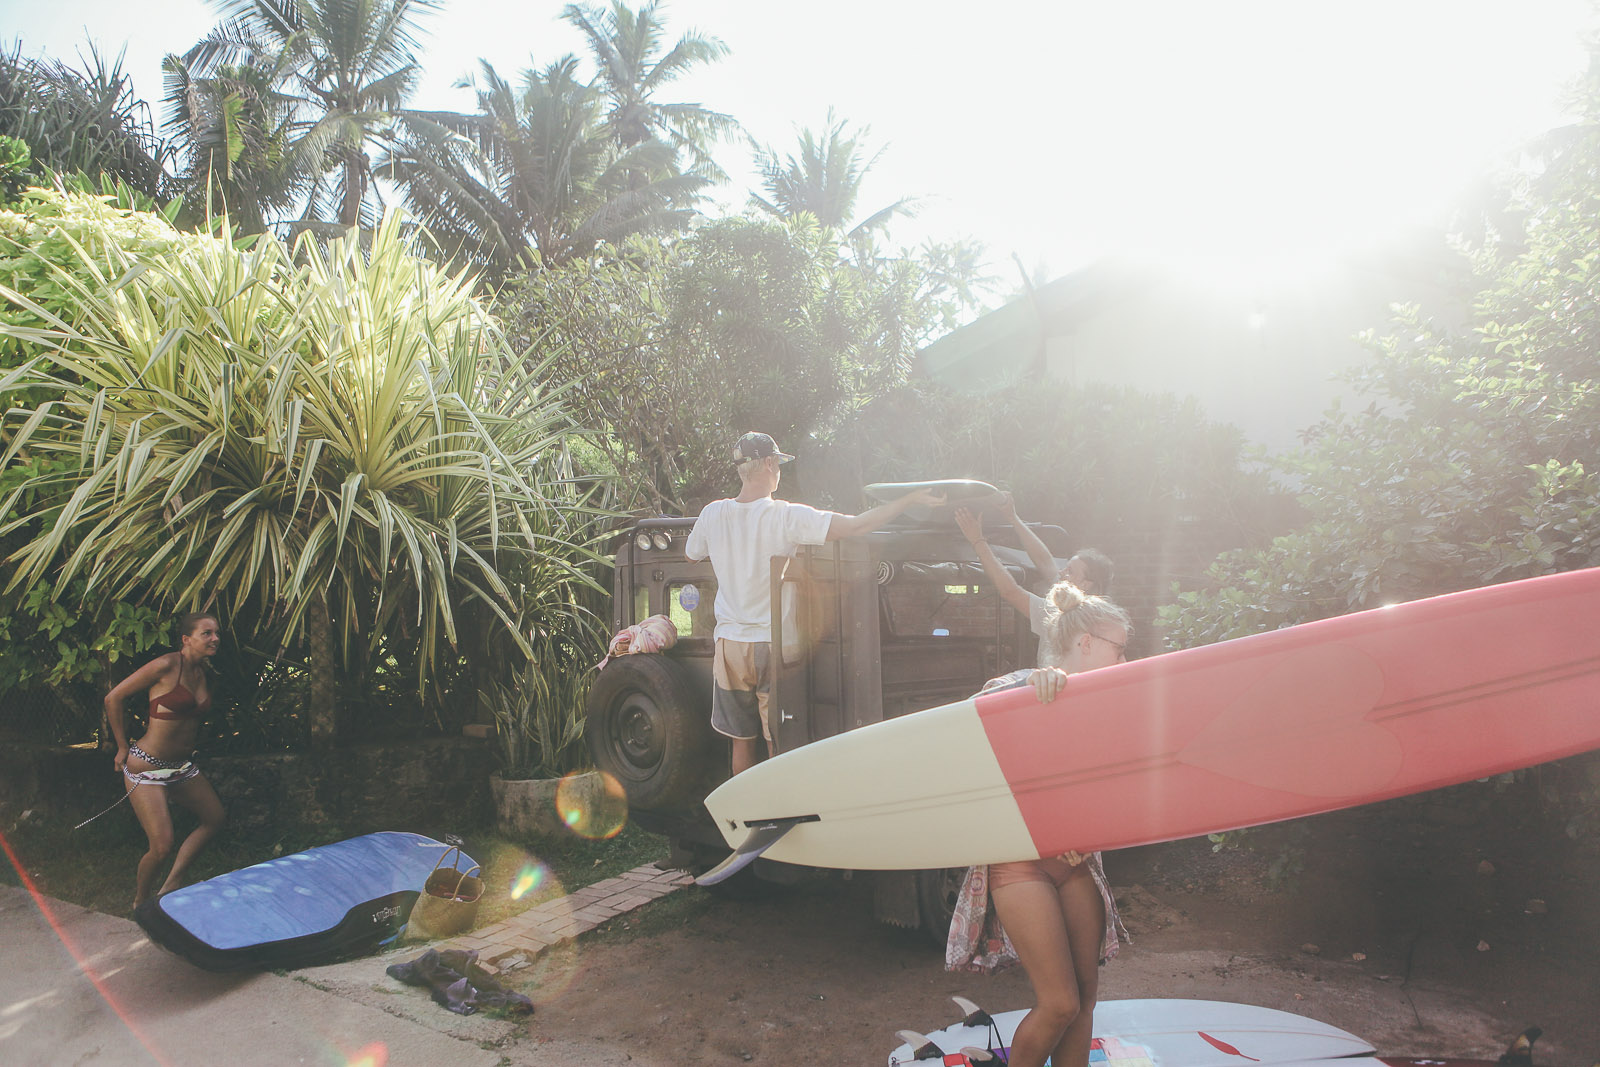 Sunshinestories-Sri-Lanka-Medawatta-Medawata-Meda-Watta-Mada-surf-Lonboard-Surfing-Wave-Surf-School-Camp-Yoga-Studio-IMG_0777